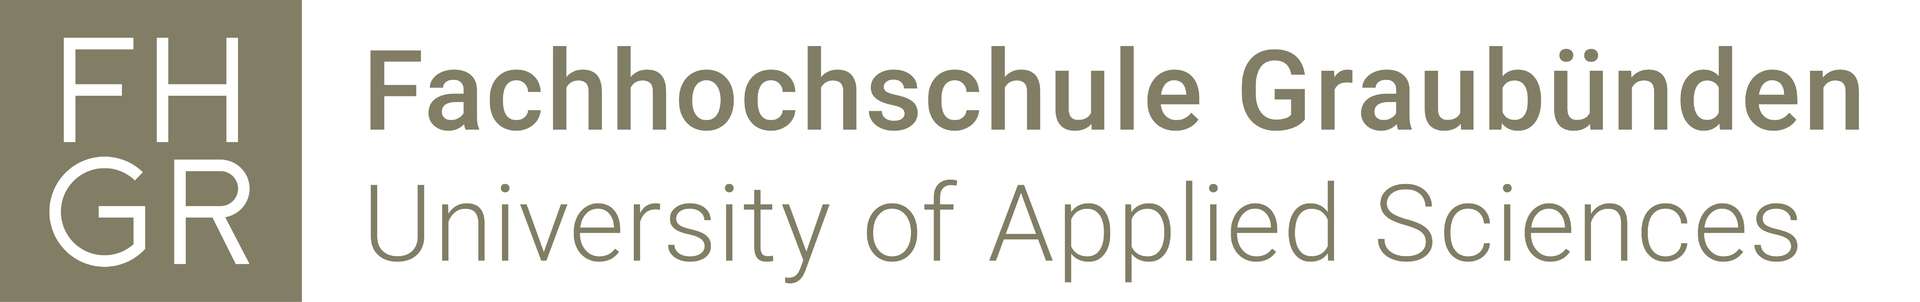 web_2020_Logo_Fachhochschule Graubünden.jpg